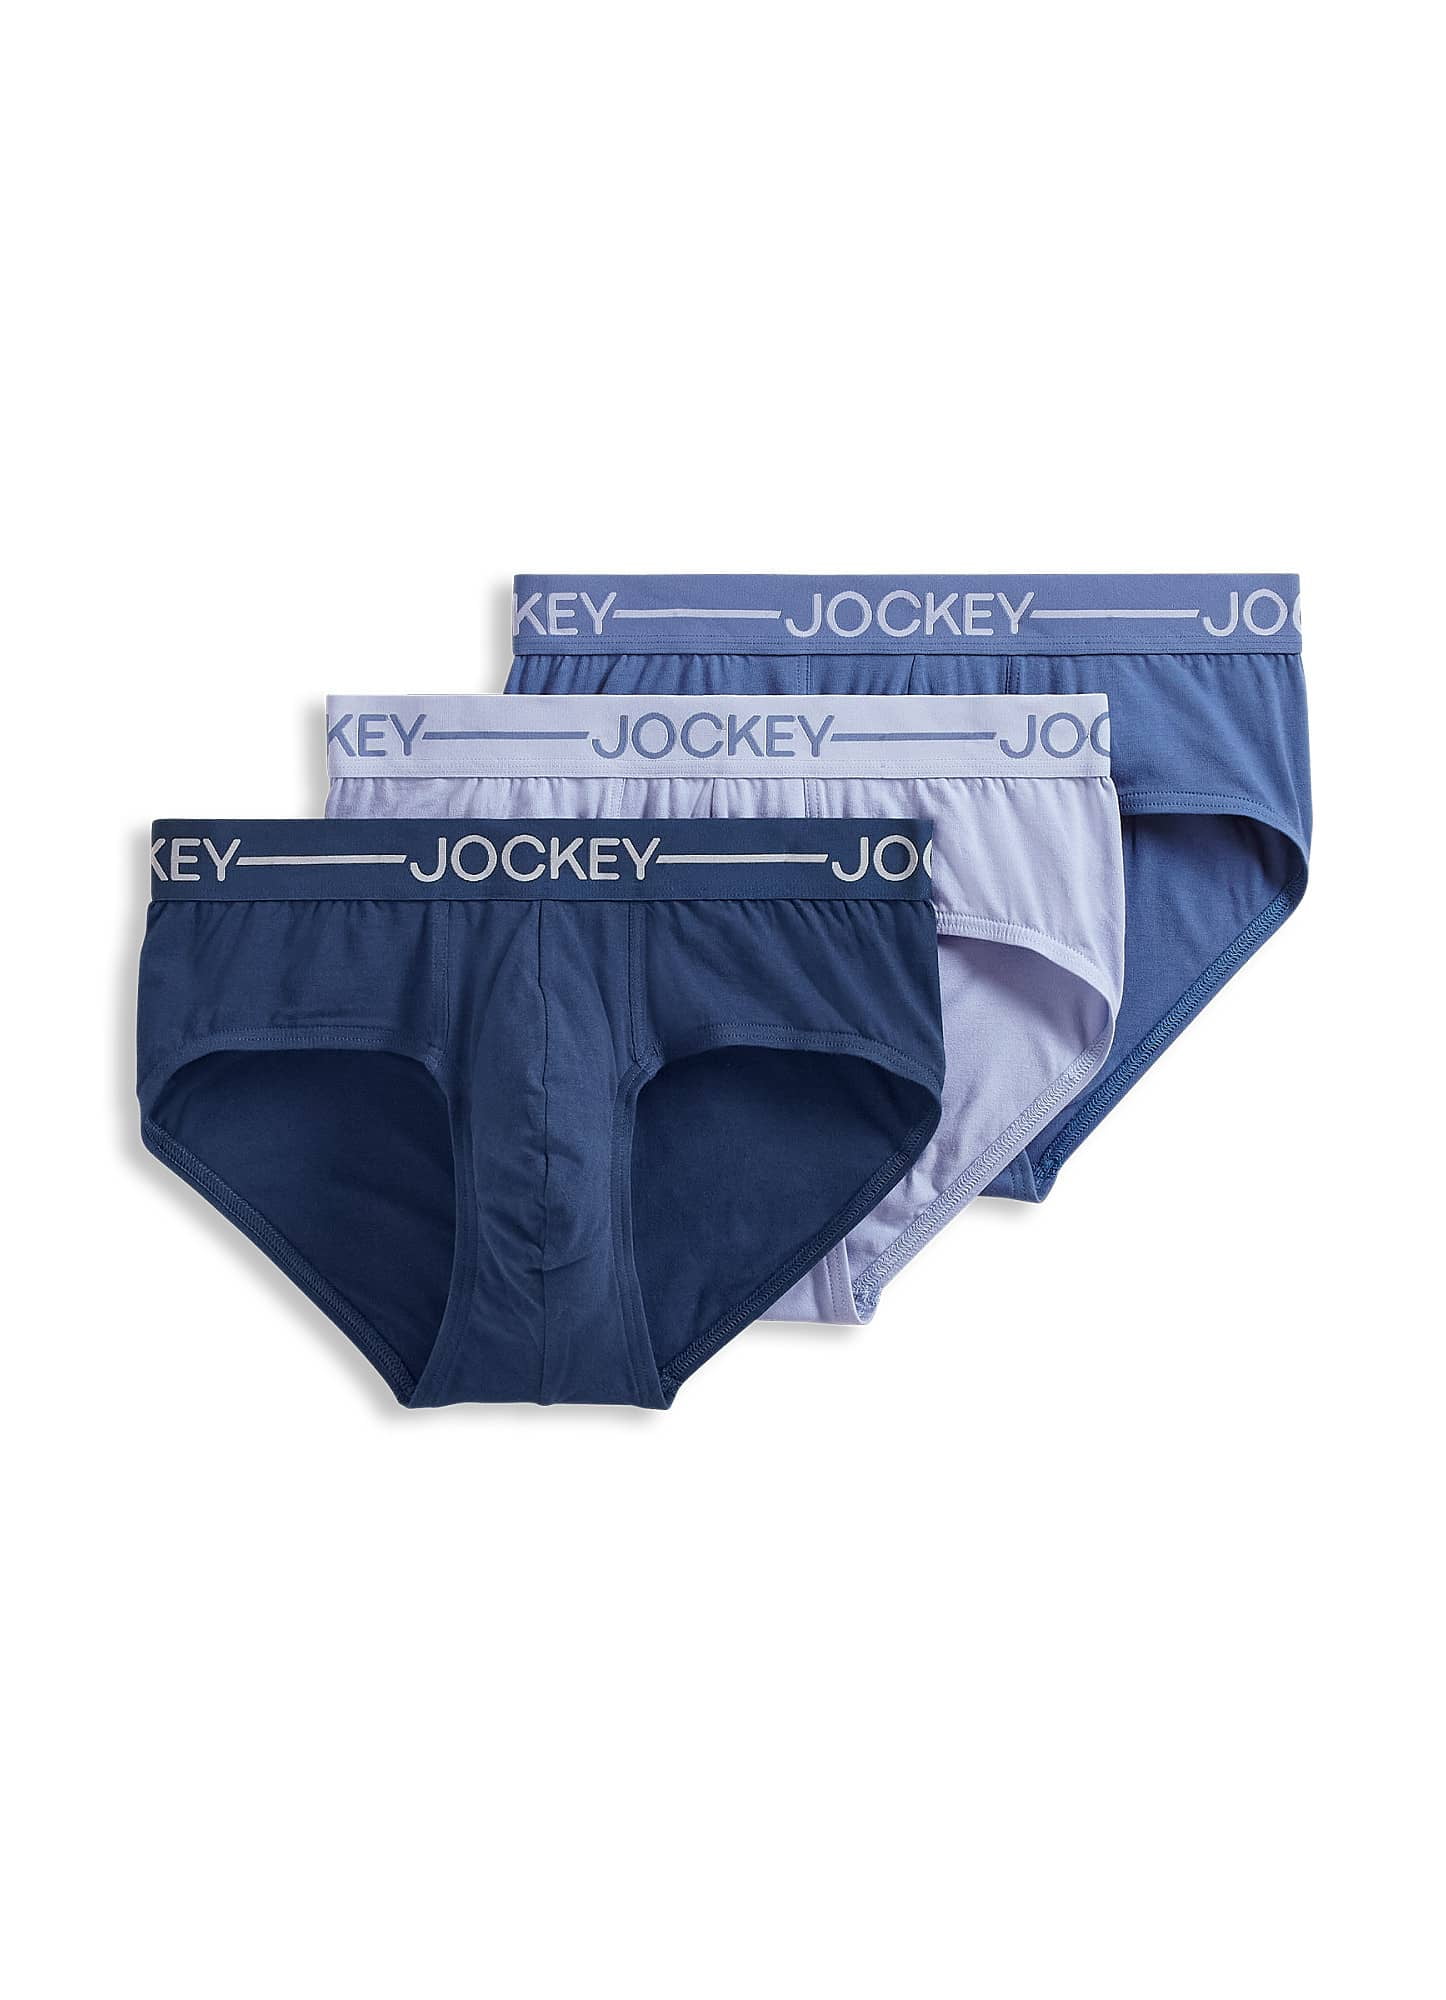 Jockey Men's Organic Cotton Stretch Brief - 3 Pack